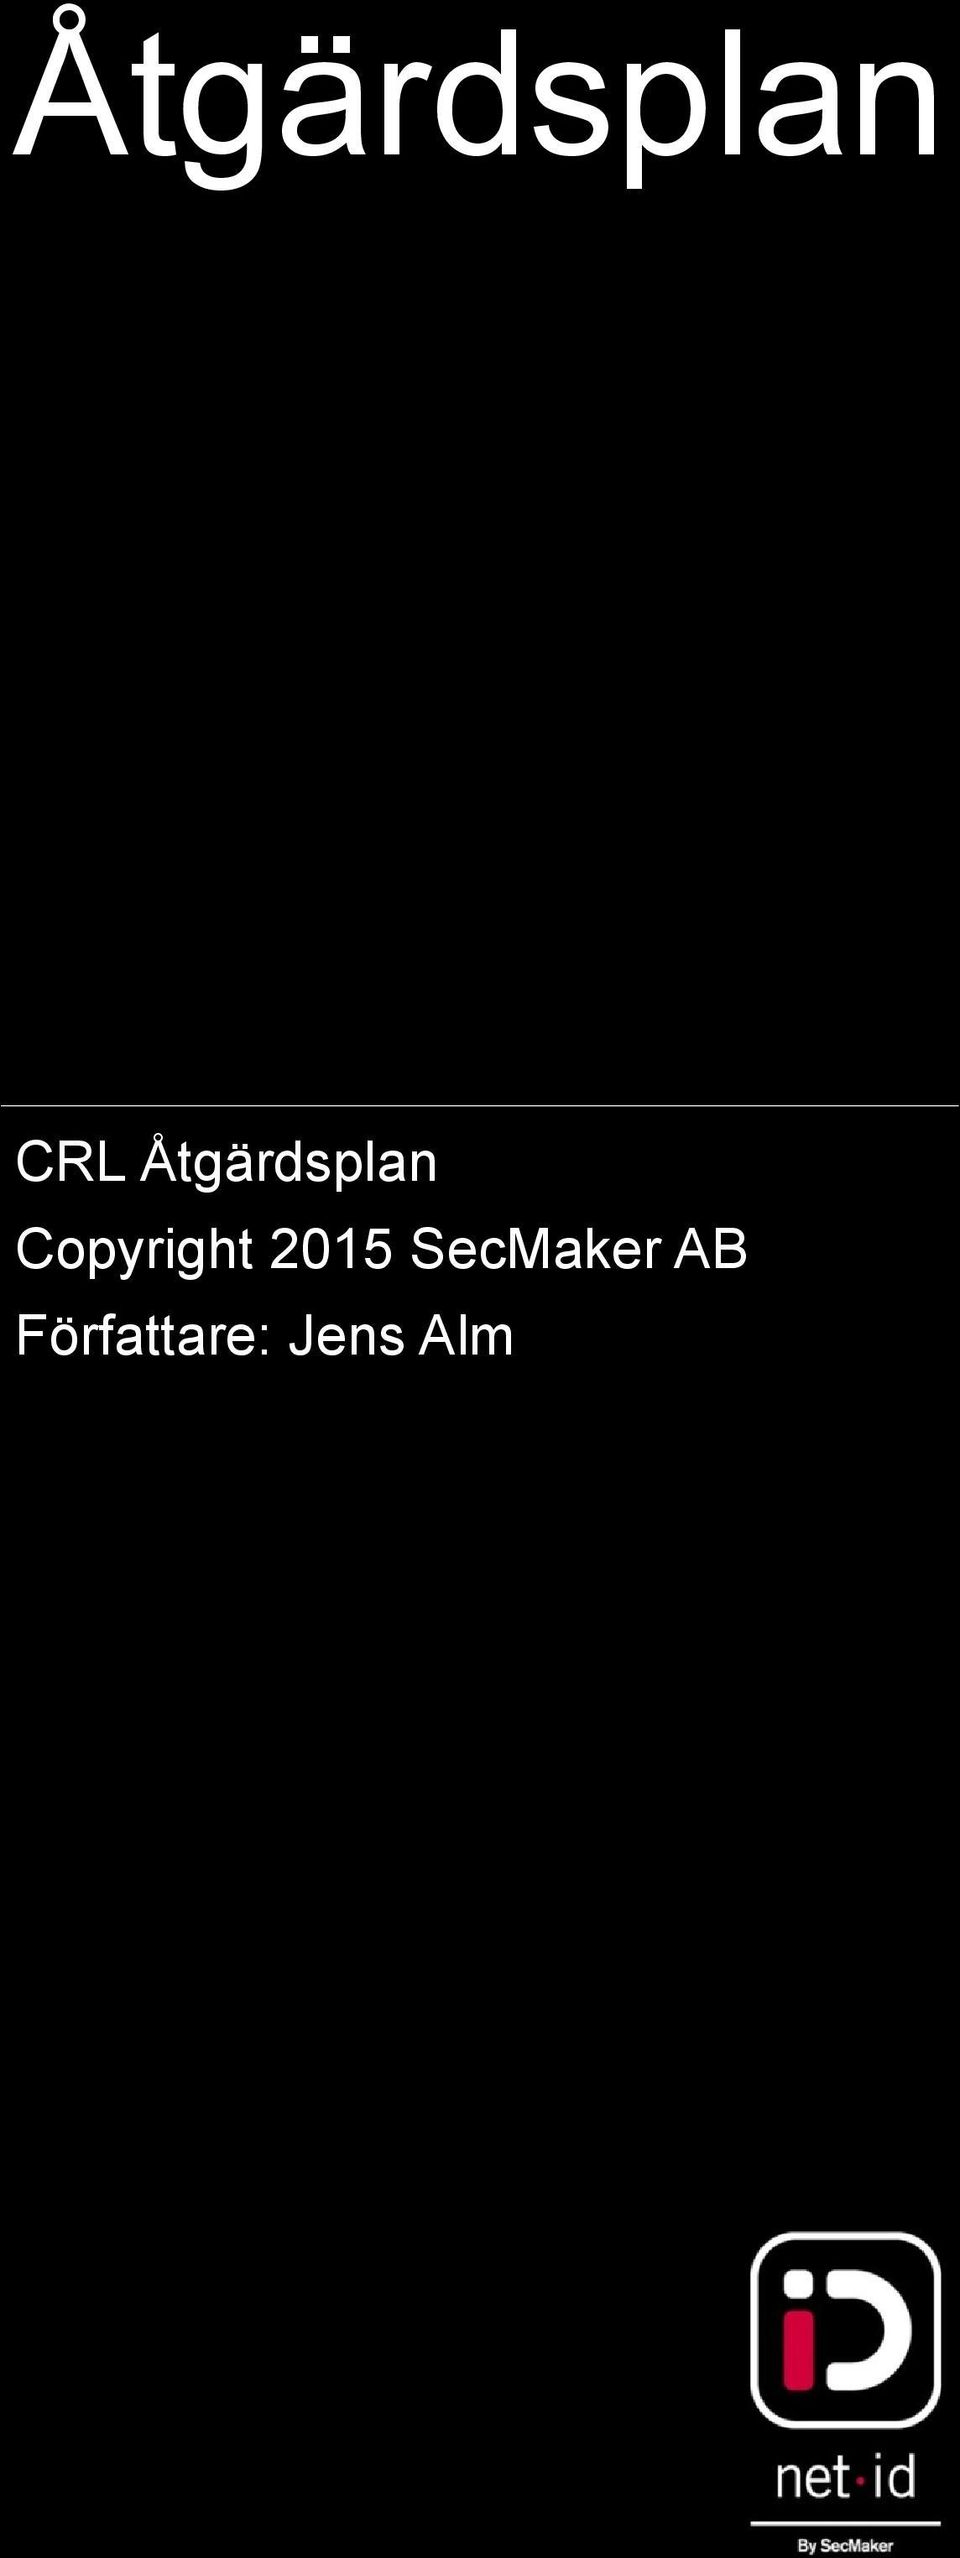 Copyright 2015